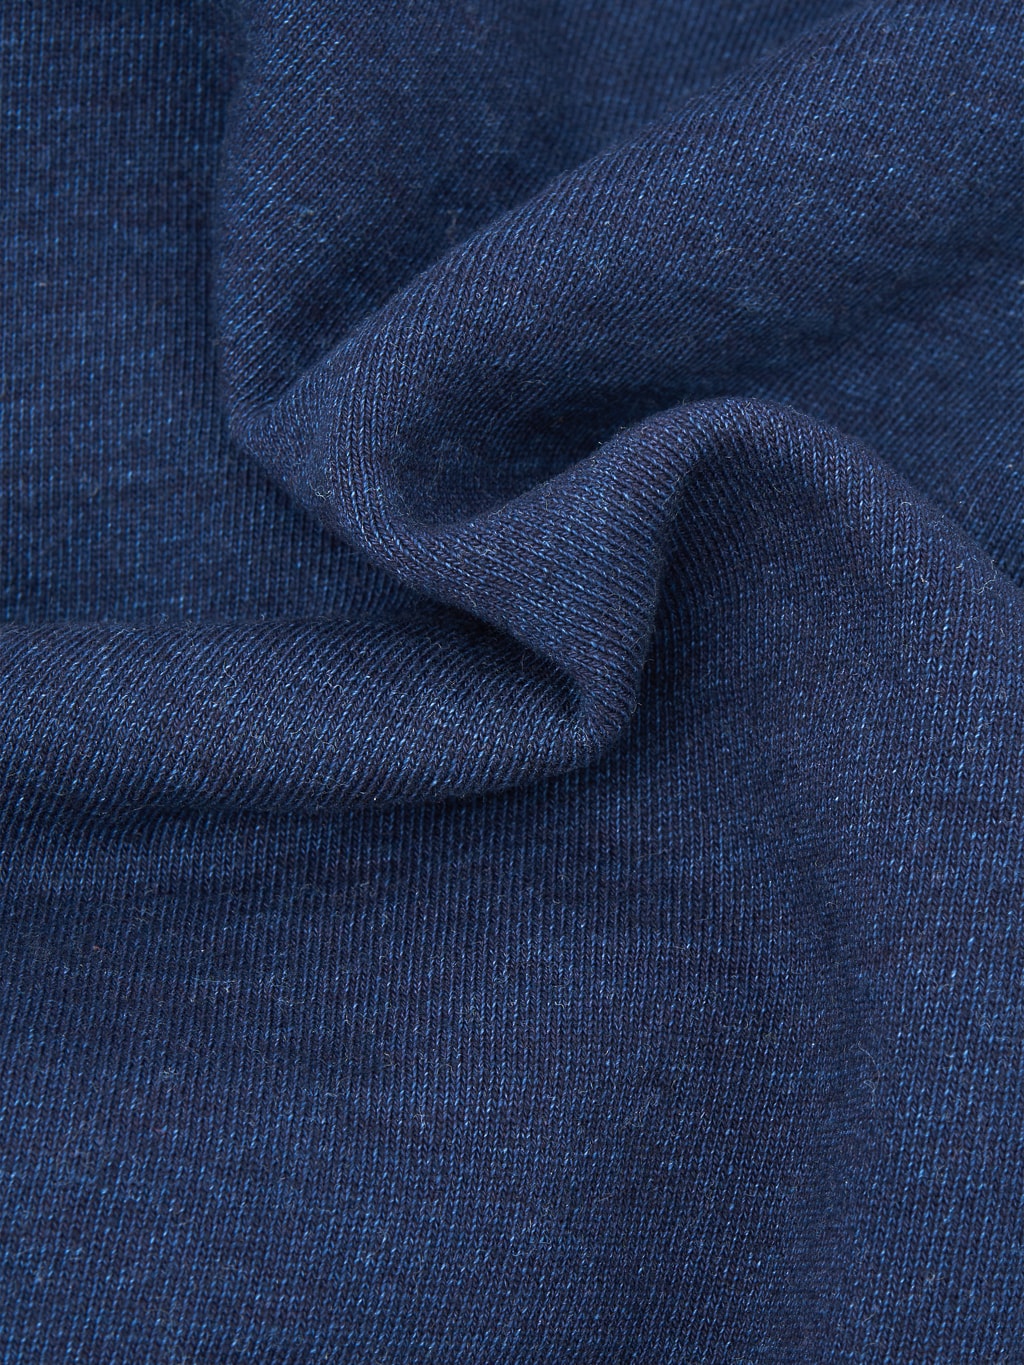 ues sweat pants indigo cotton texture fabric